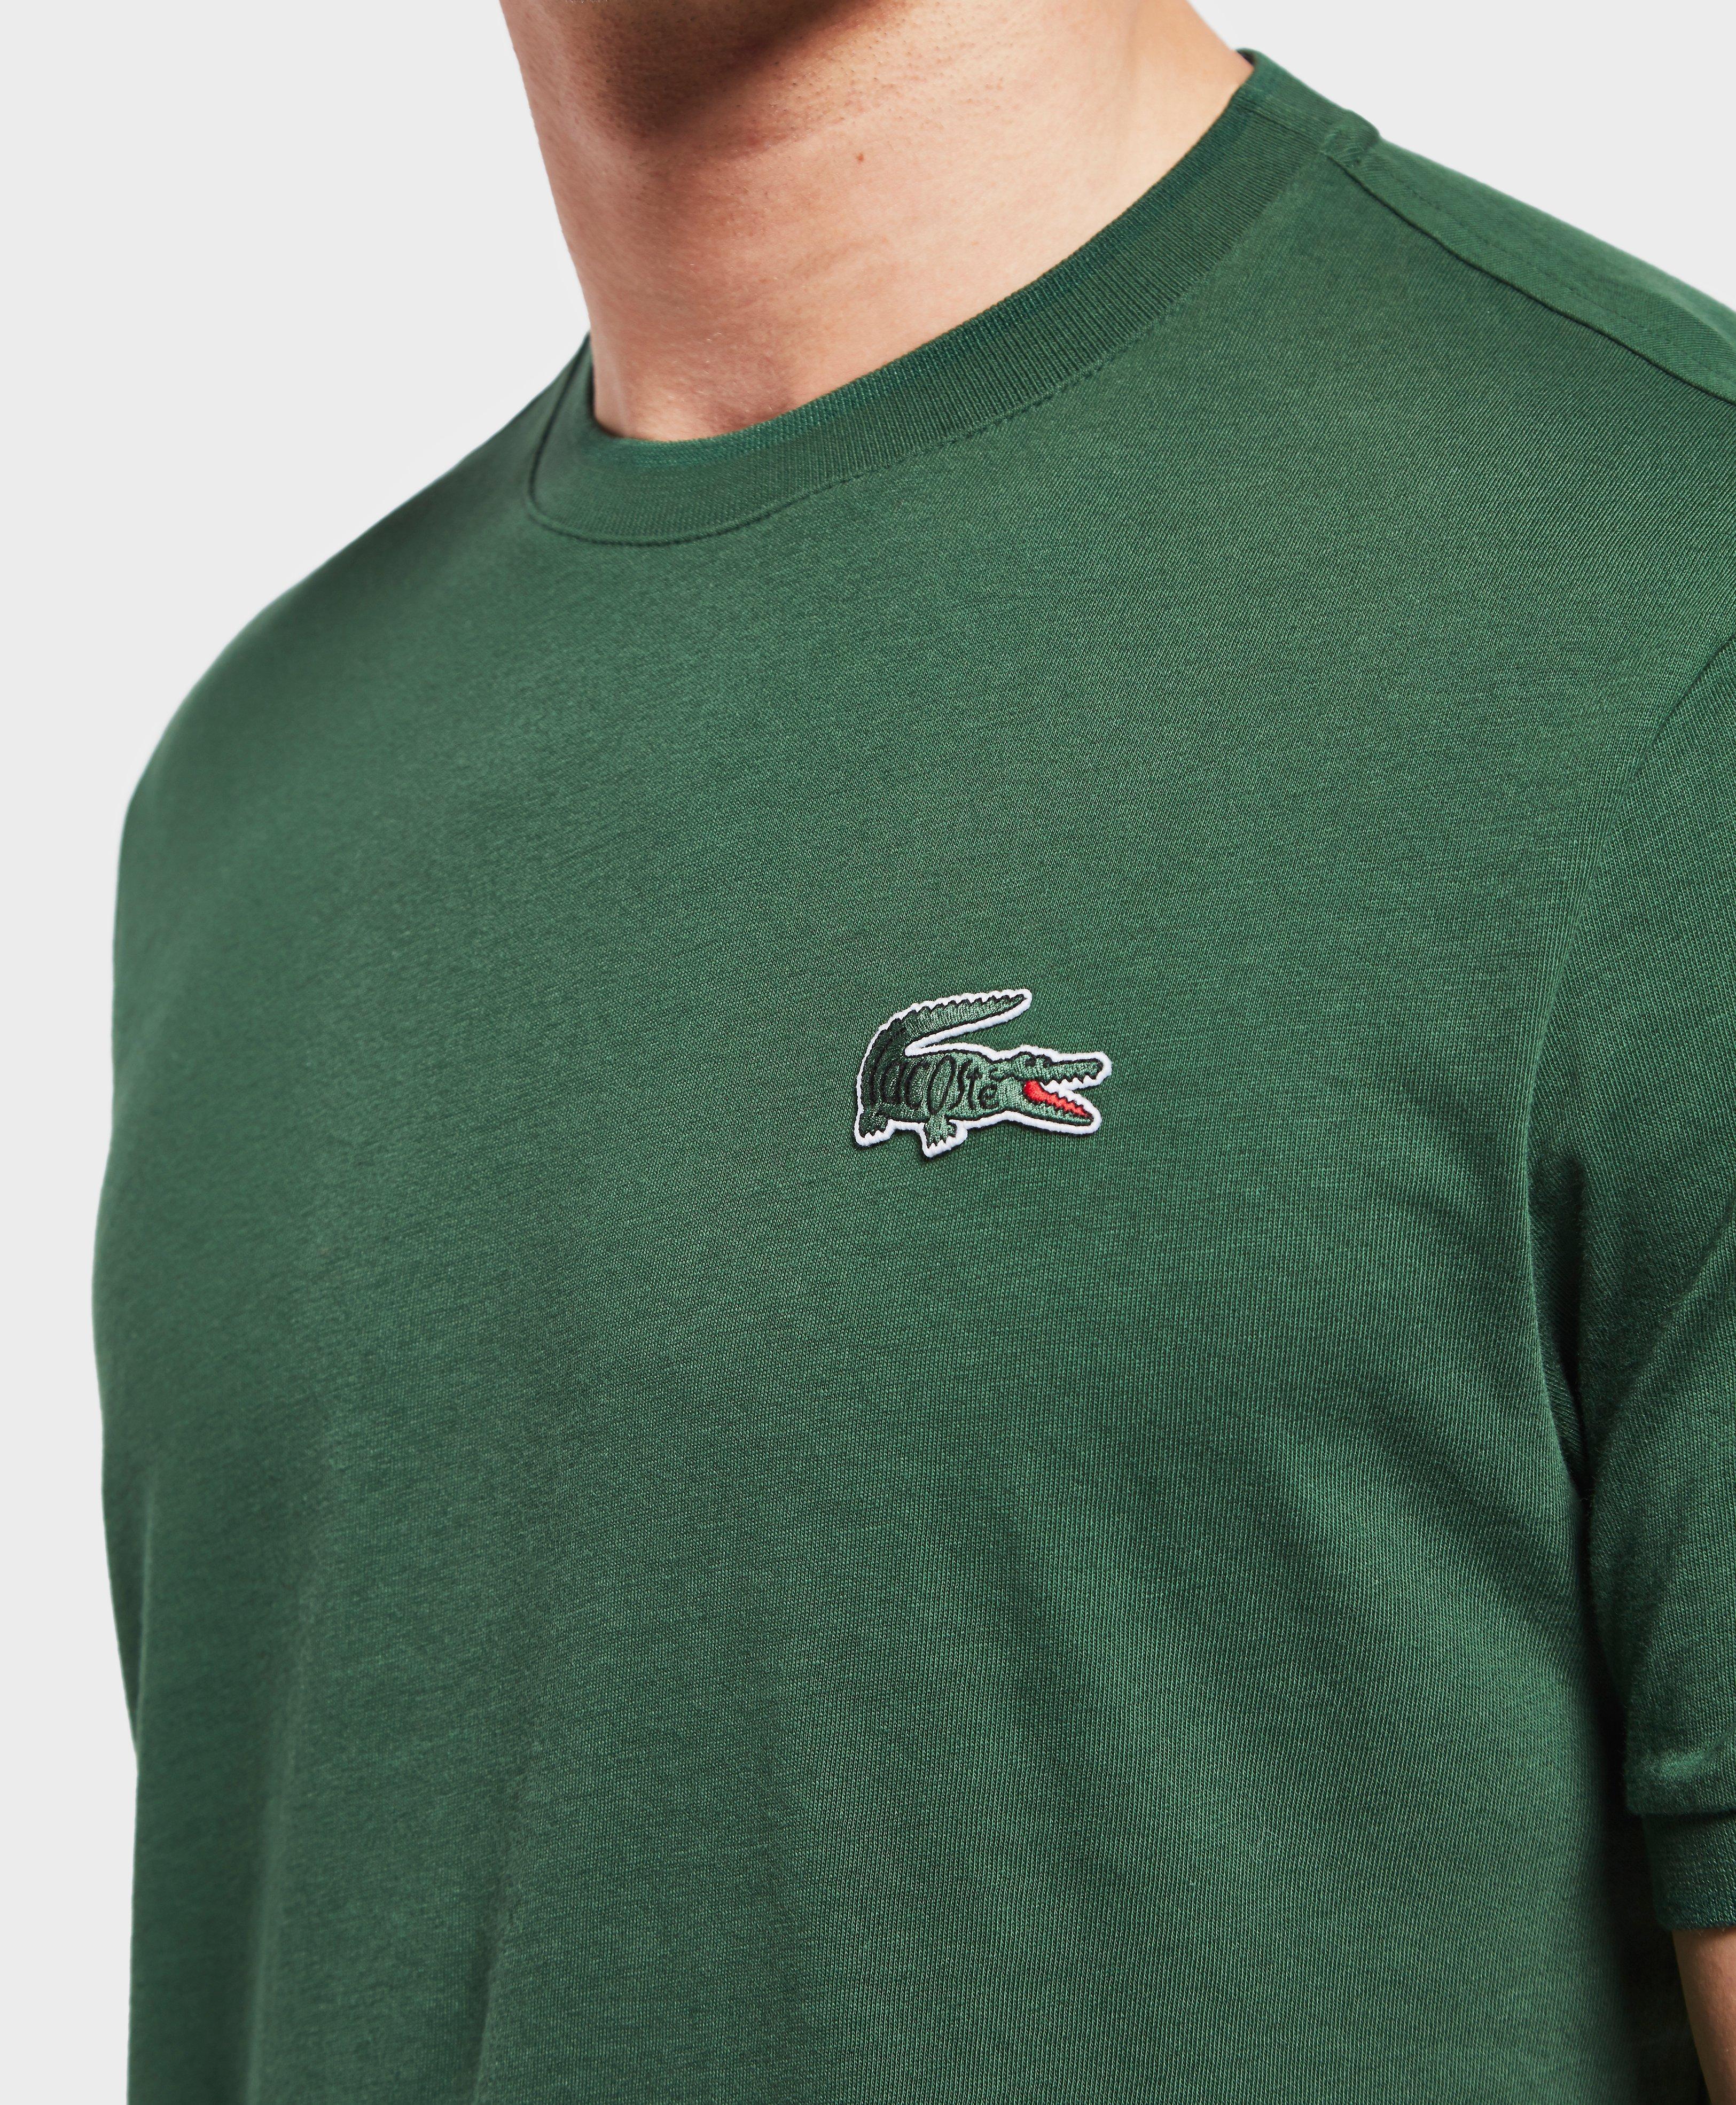 Harmoni eventyr Madison Lacoste Cotton Big Croc Logo Short Sleeve T-shirt in Green for Men - Lyst